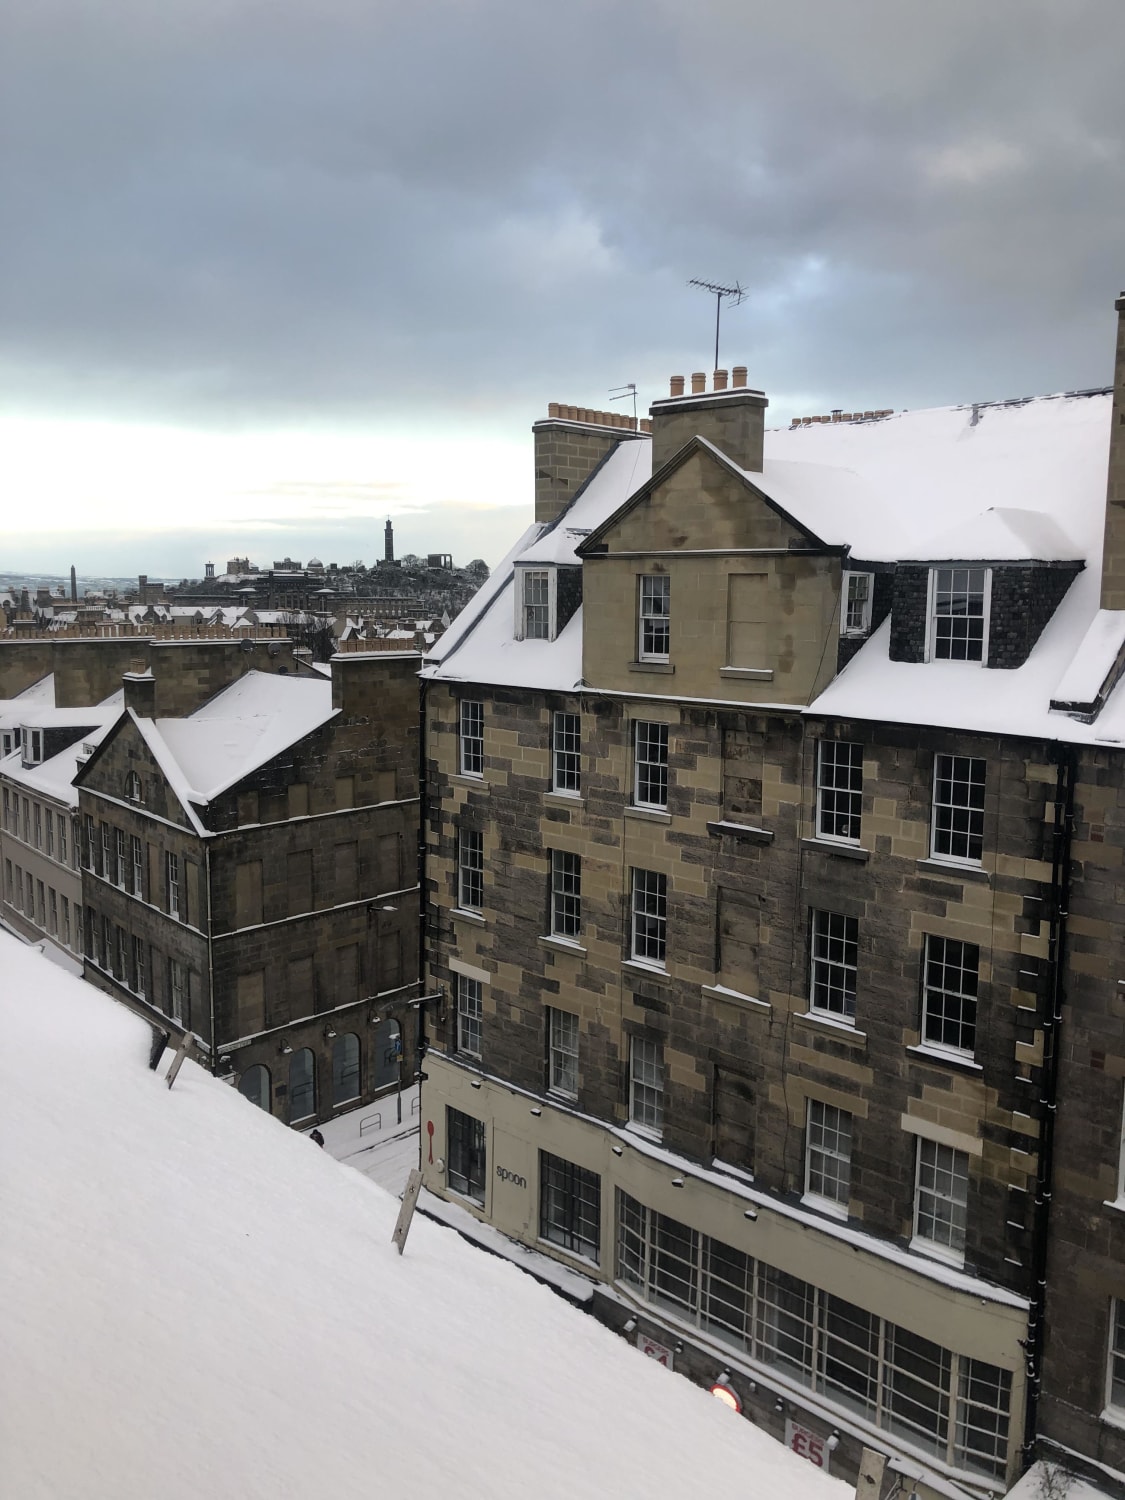 Snowy view of Edinburgh, Scotland (Photo credit to u/theologybitch)